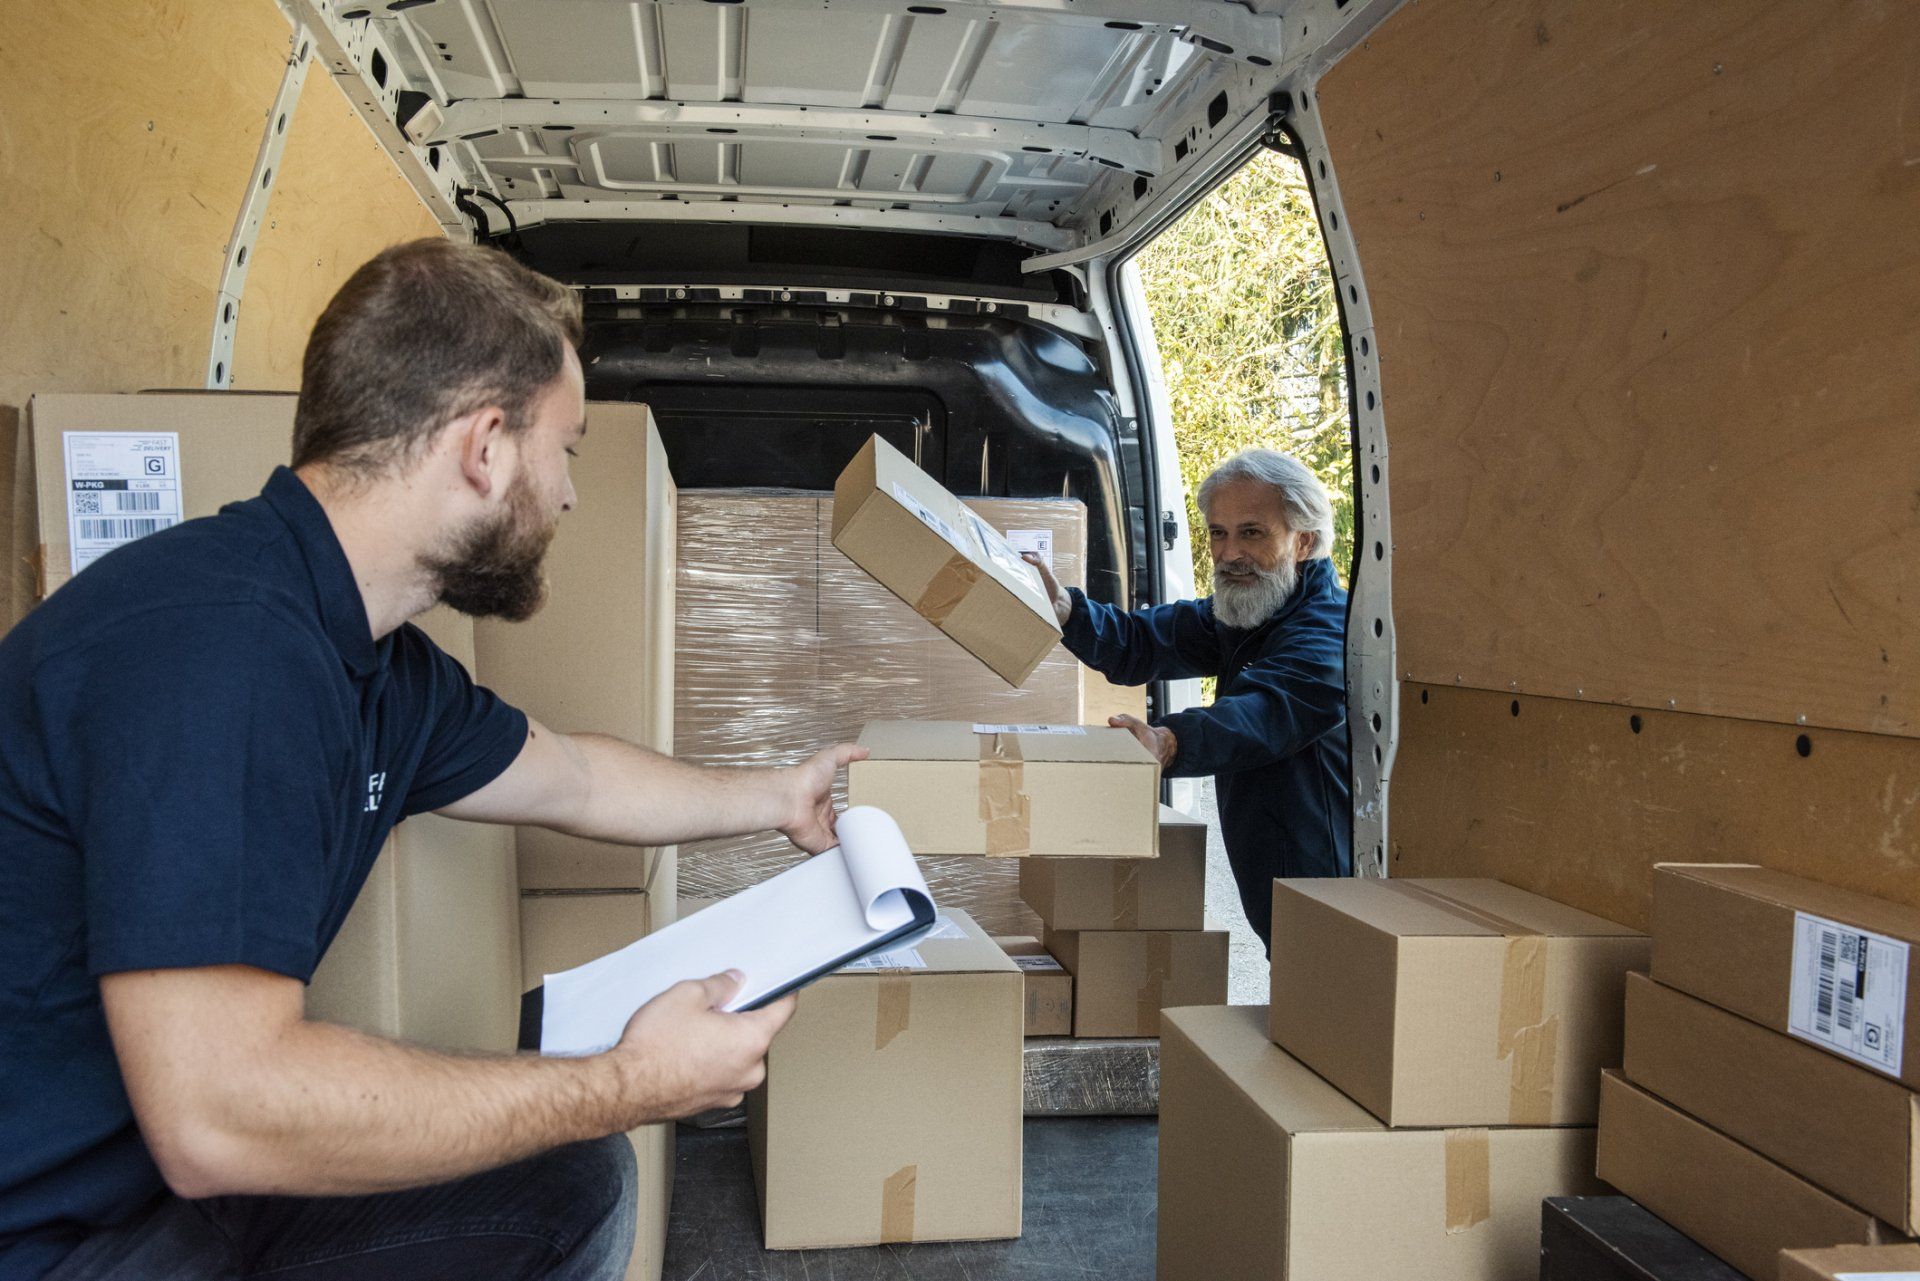 Unloading Cardboard Boxes - Yaphank, NY - Certified Van Service